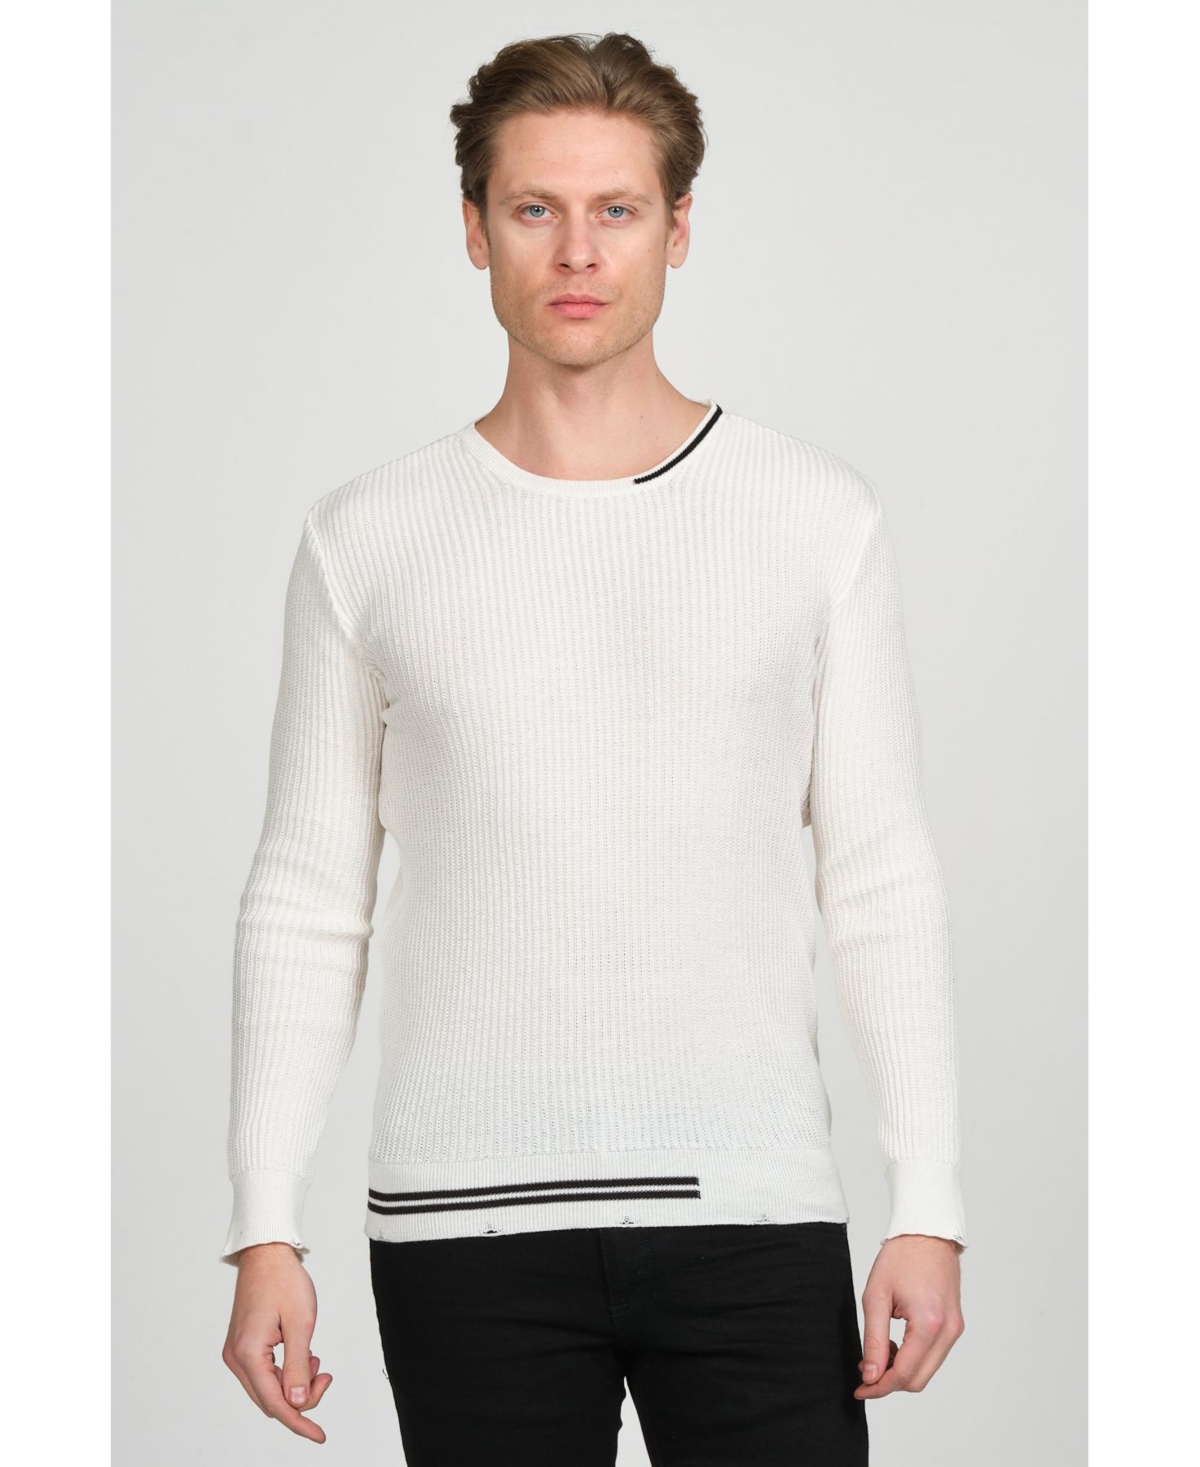 Men's Modern Half Striped Sweater - White